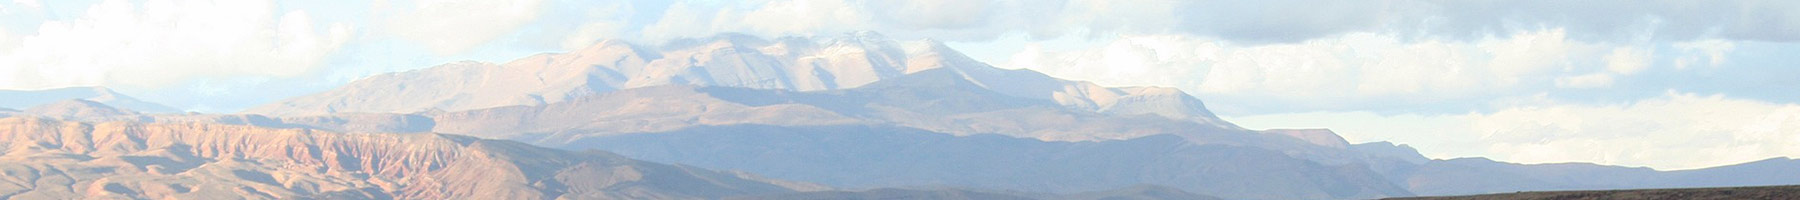 Atlas Mountains in Morrocco